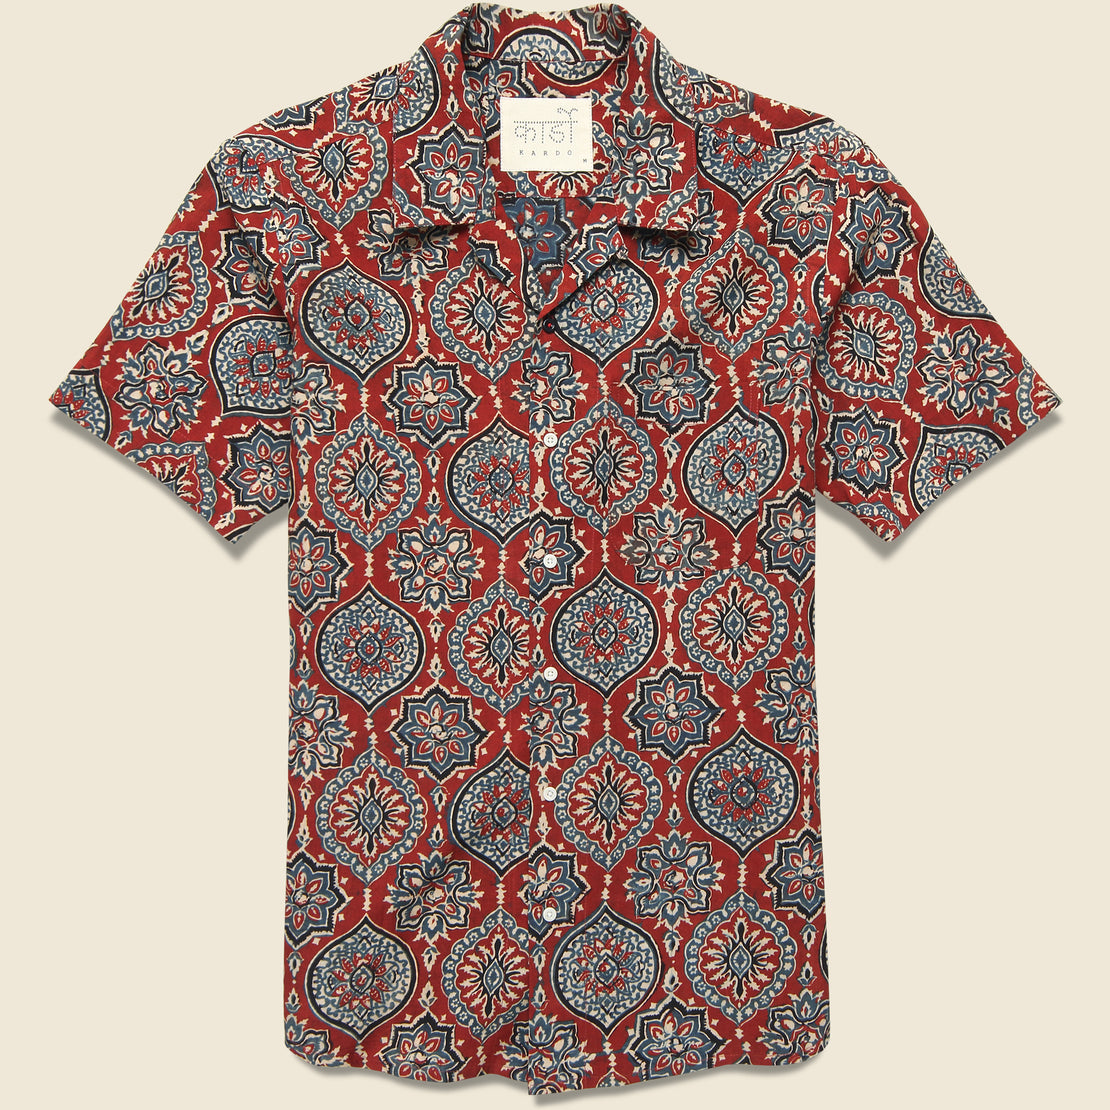 Kardo Lamar Block Print Tile Shirt - Red